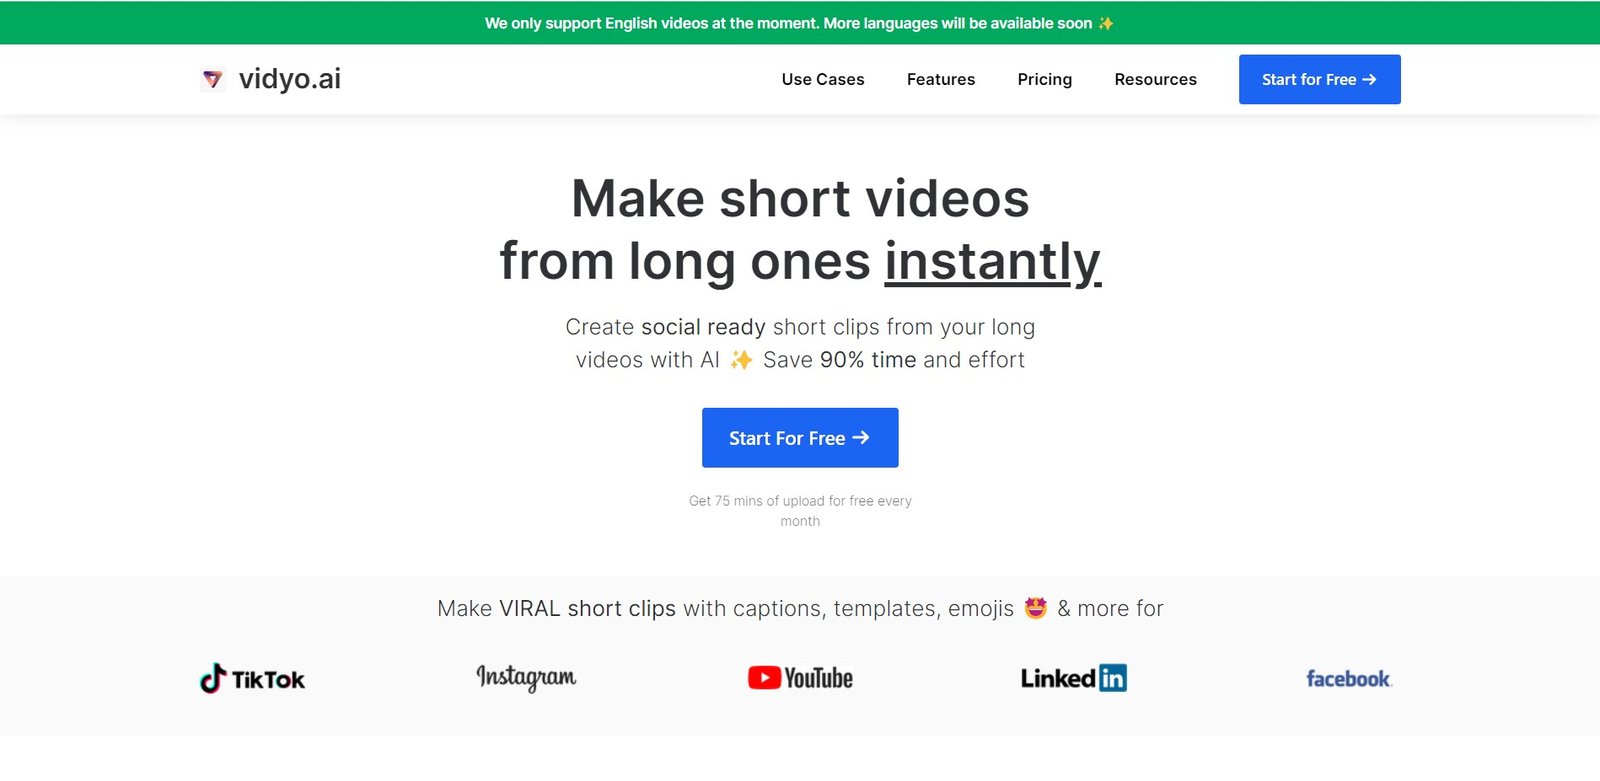 Vidyo is an AI-powered video editing platform that simplifies content repurposing for creators